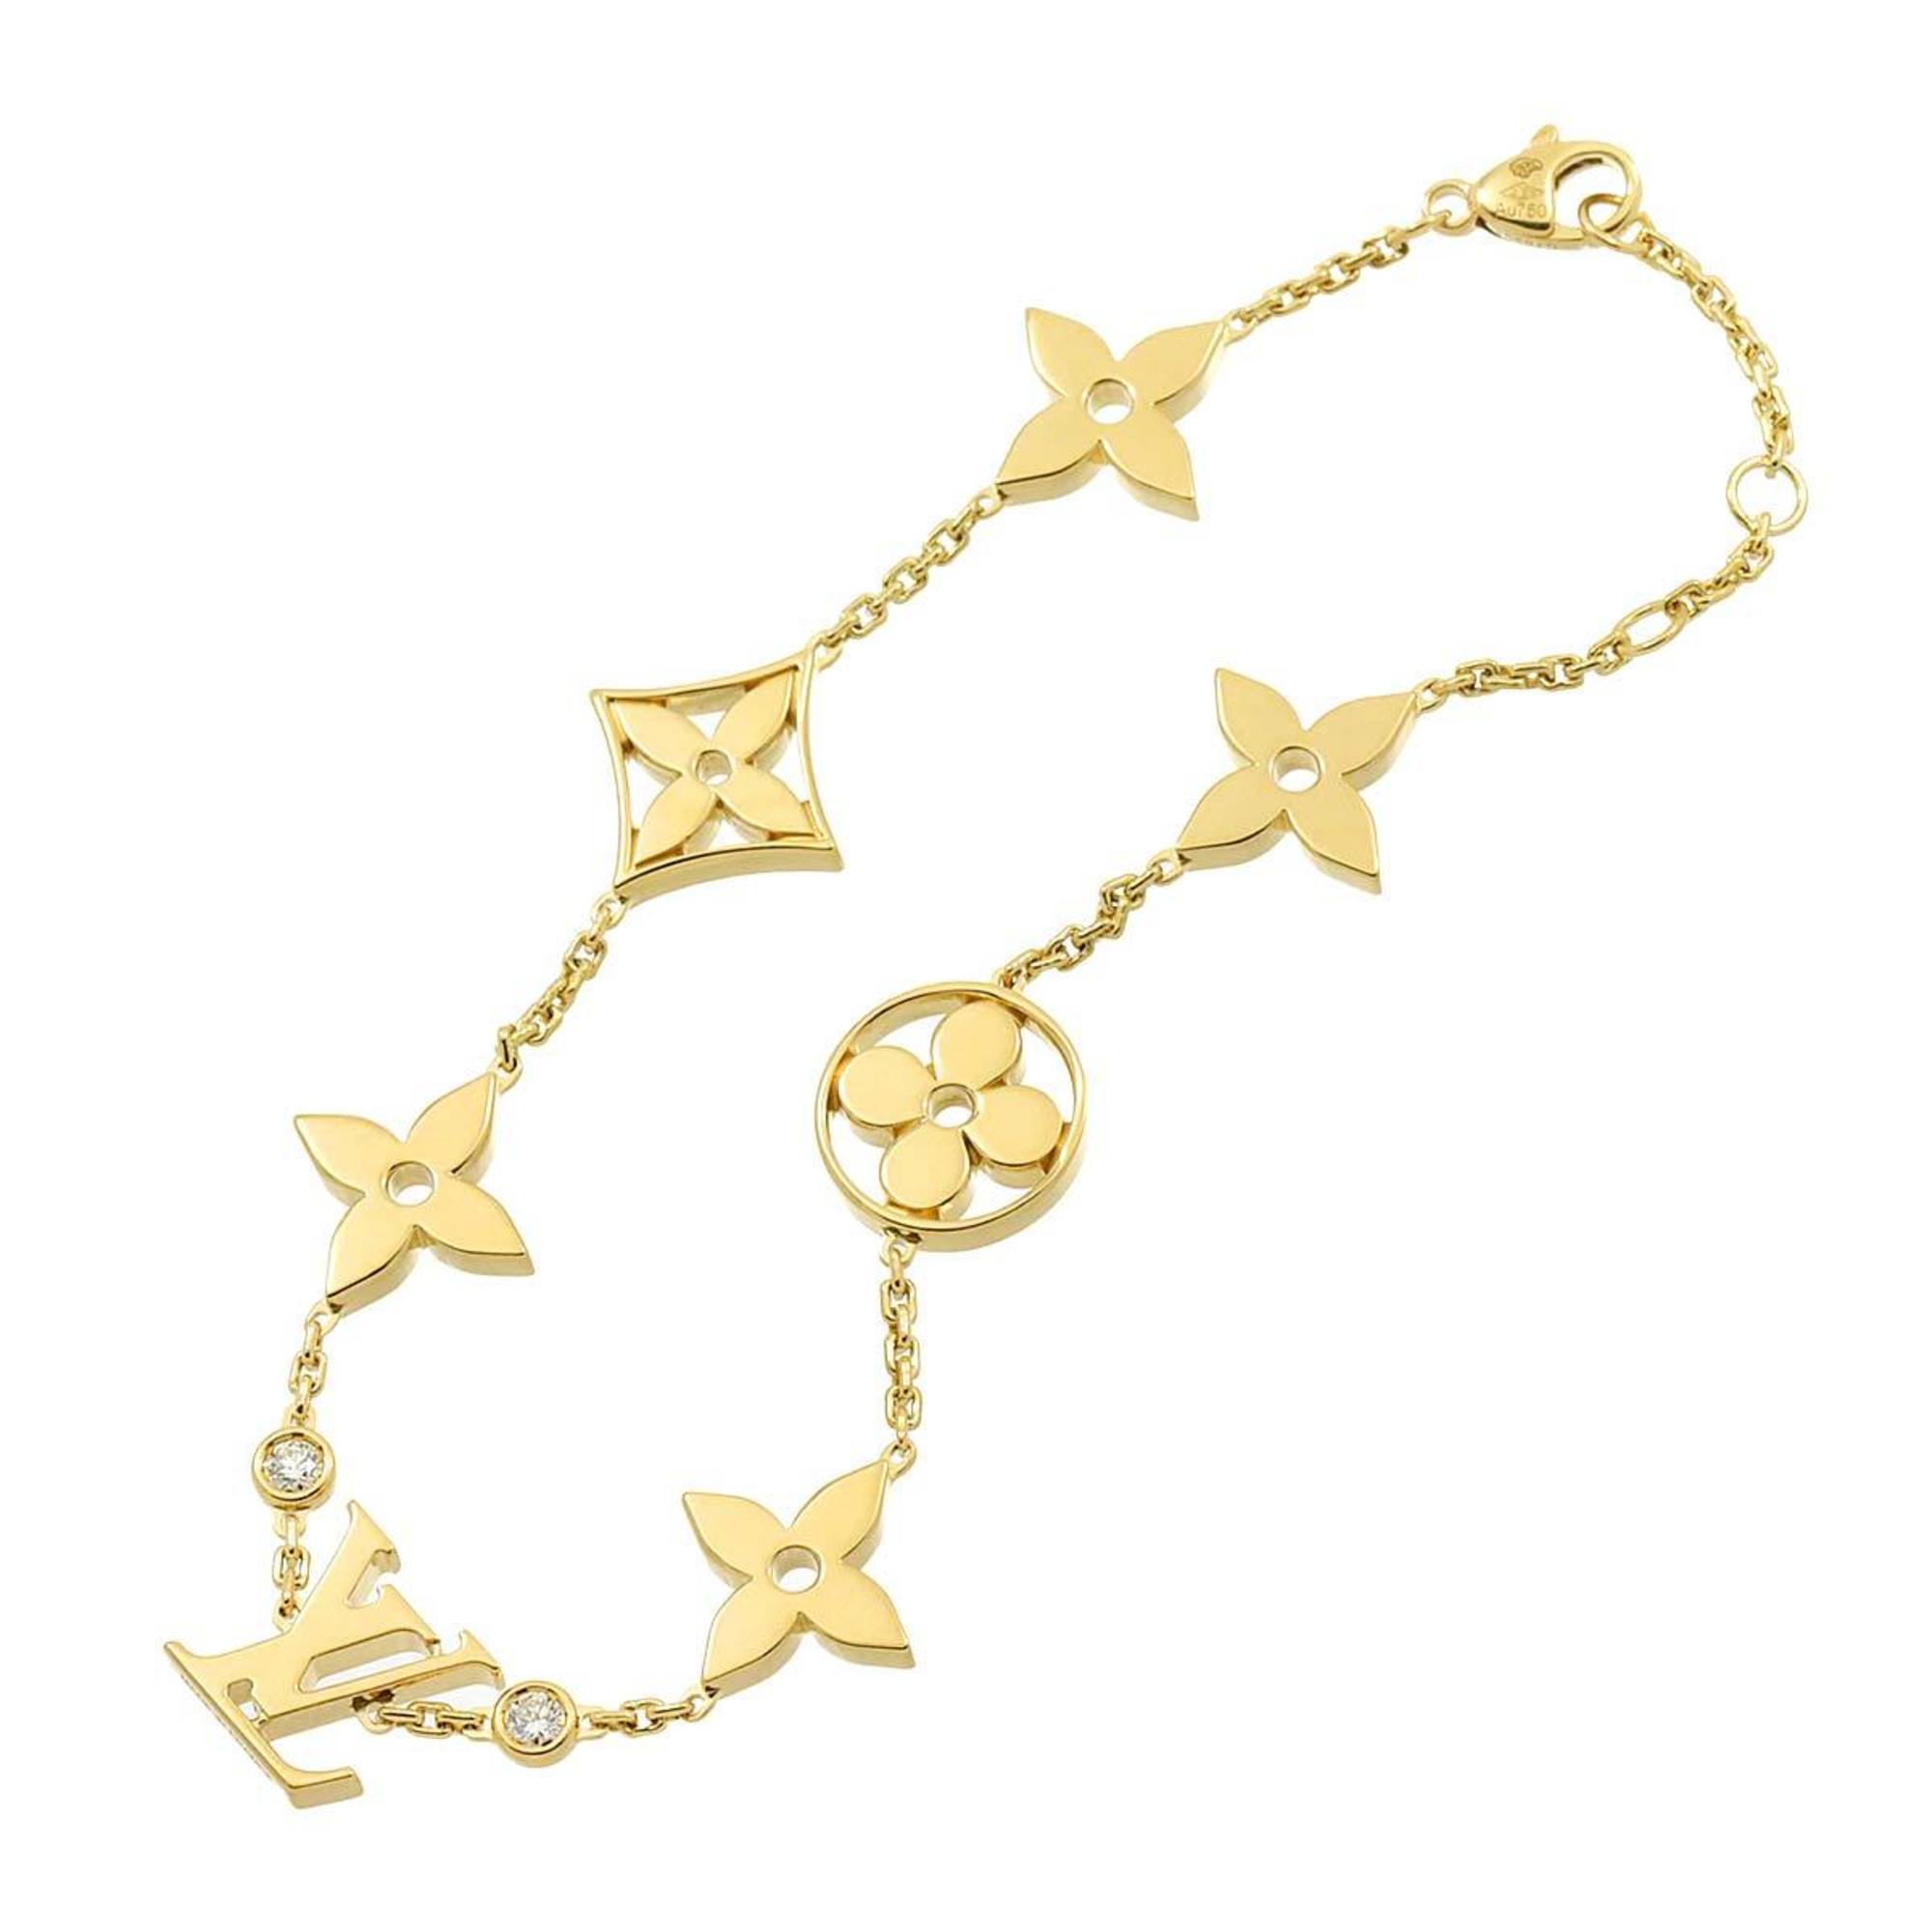 Louis Vuitton Monogram Idylle Blossom 18cm Diamond Bracelet K18 YG Yellow Gold 750